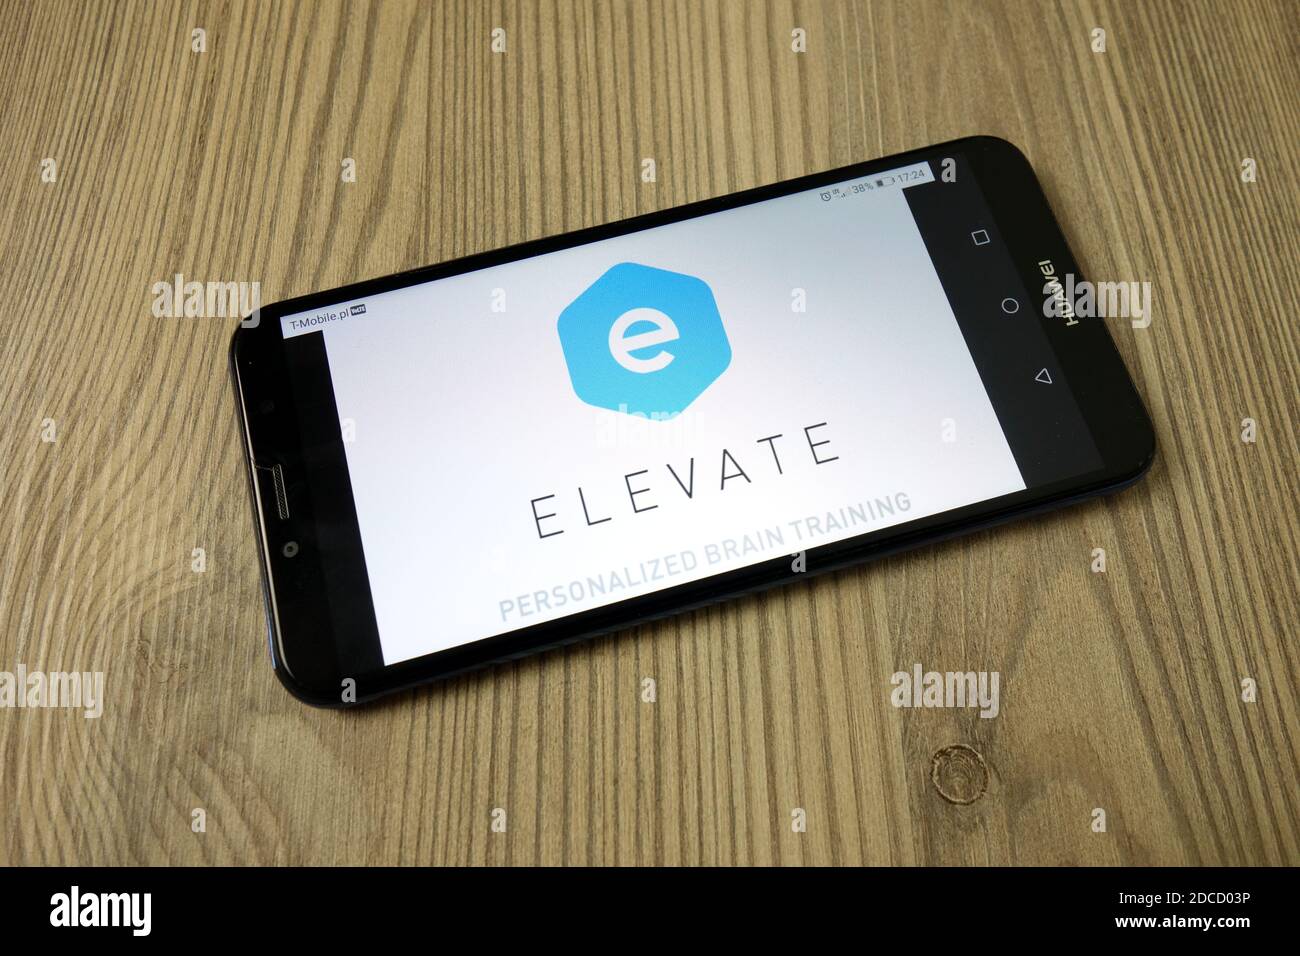 KONSKIE, POLAND - November 19, 2019: Elevate app logo displayed on mobile phone Stock Photo